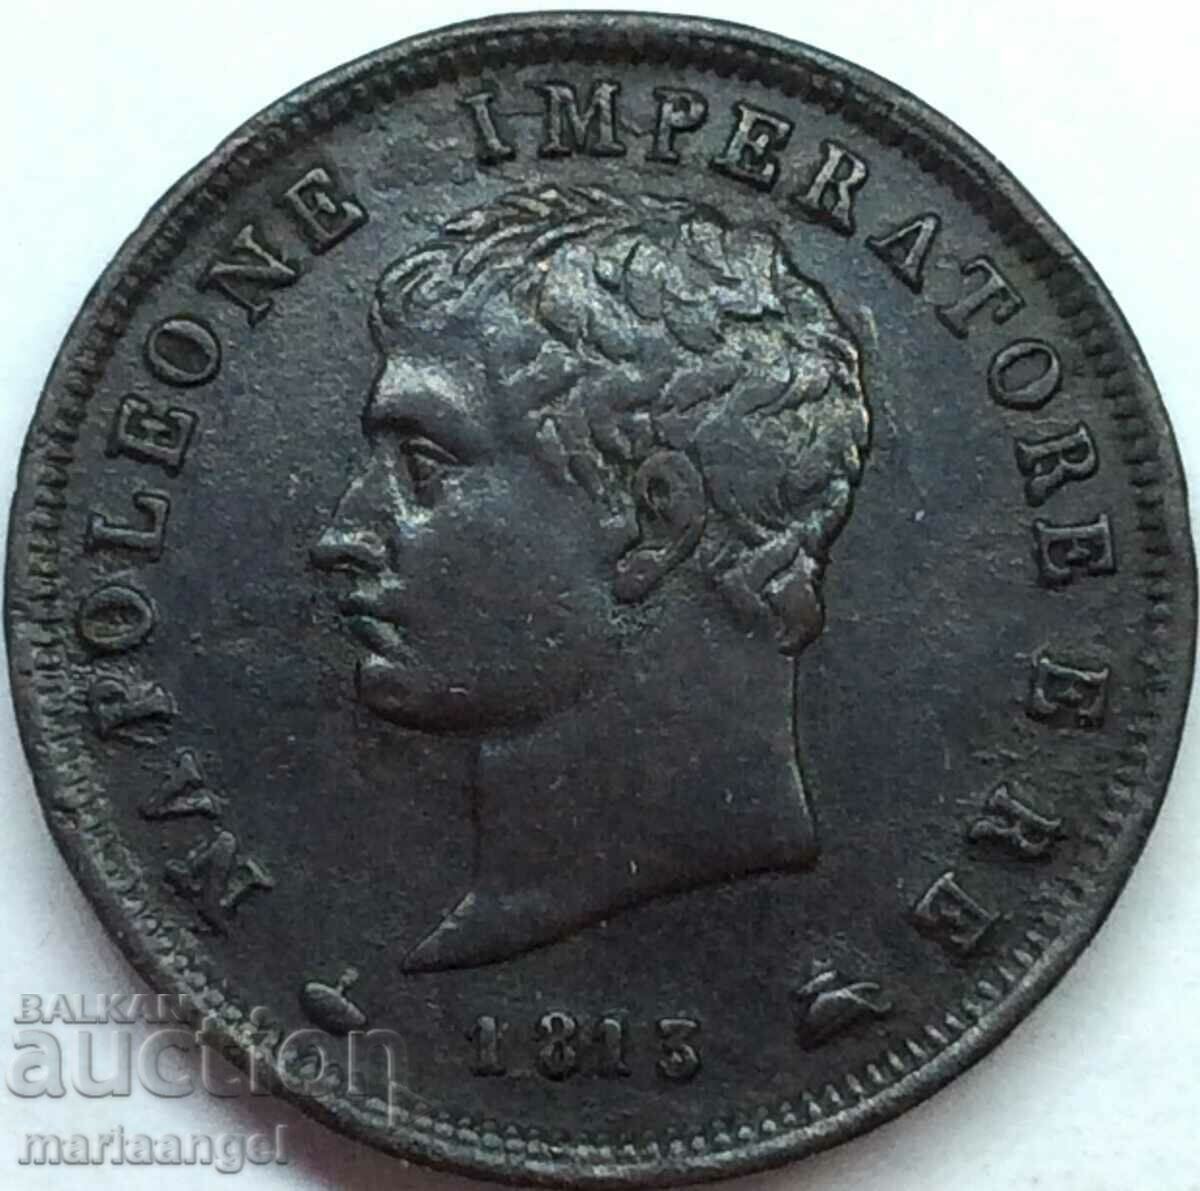 Napoleon 1 soldo 1813 Italia 10 g M - bronz Milano